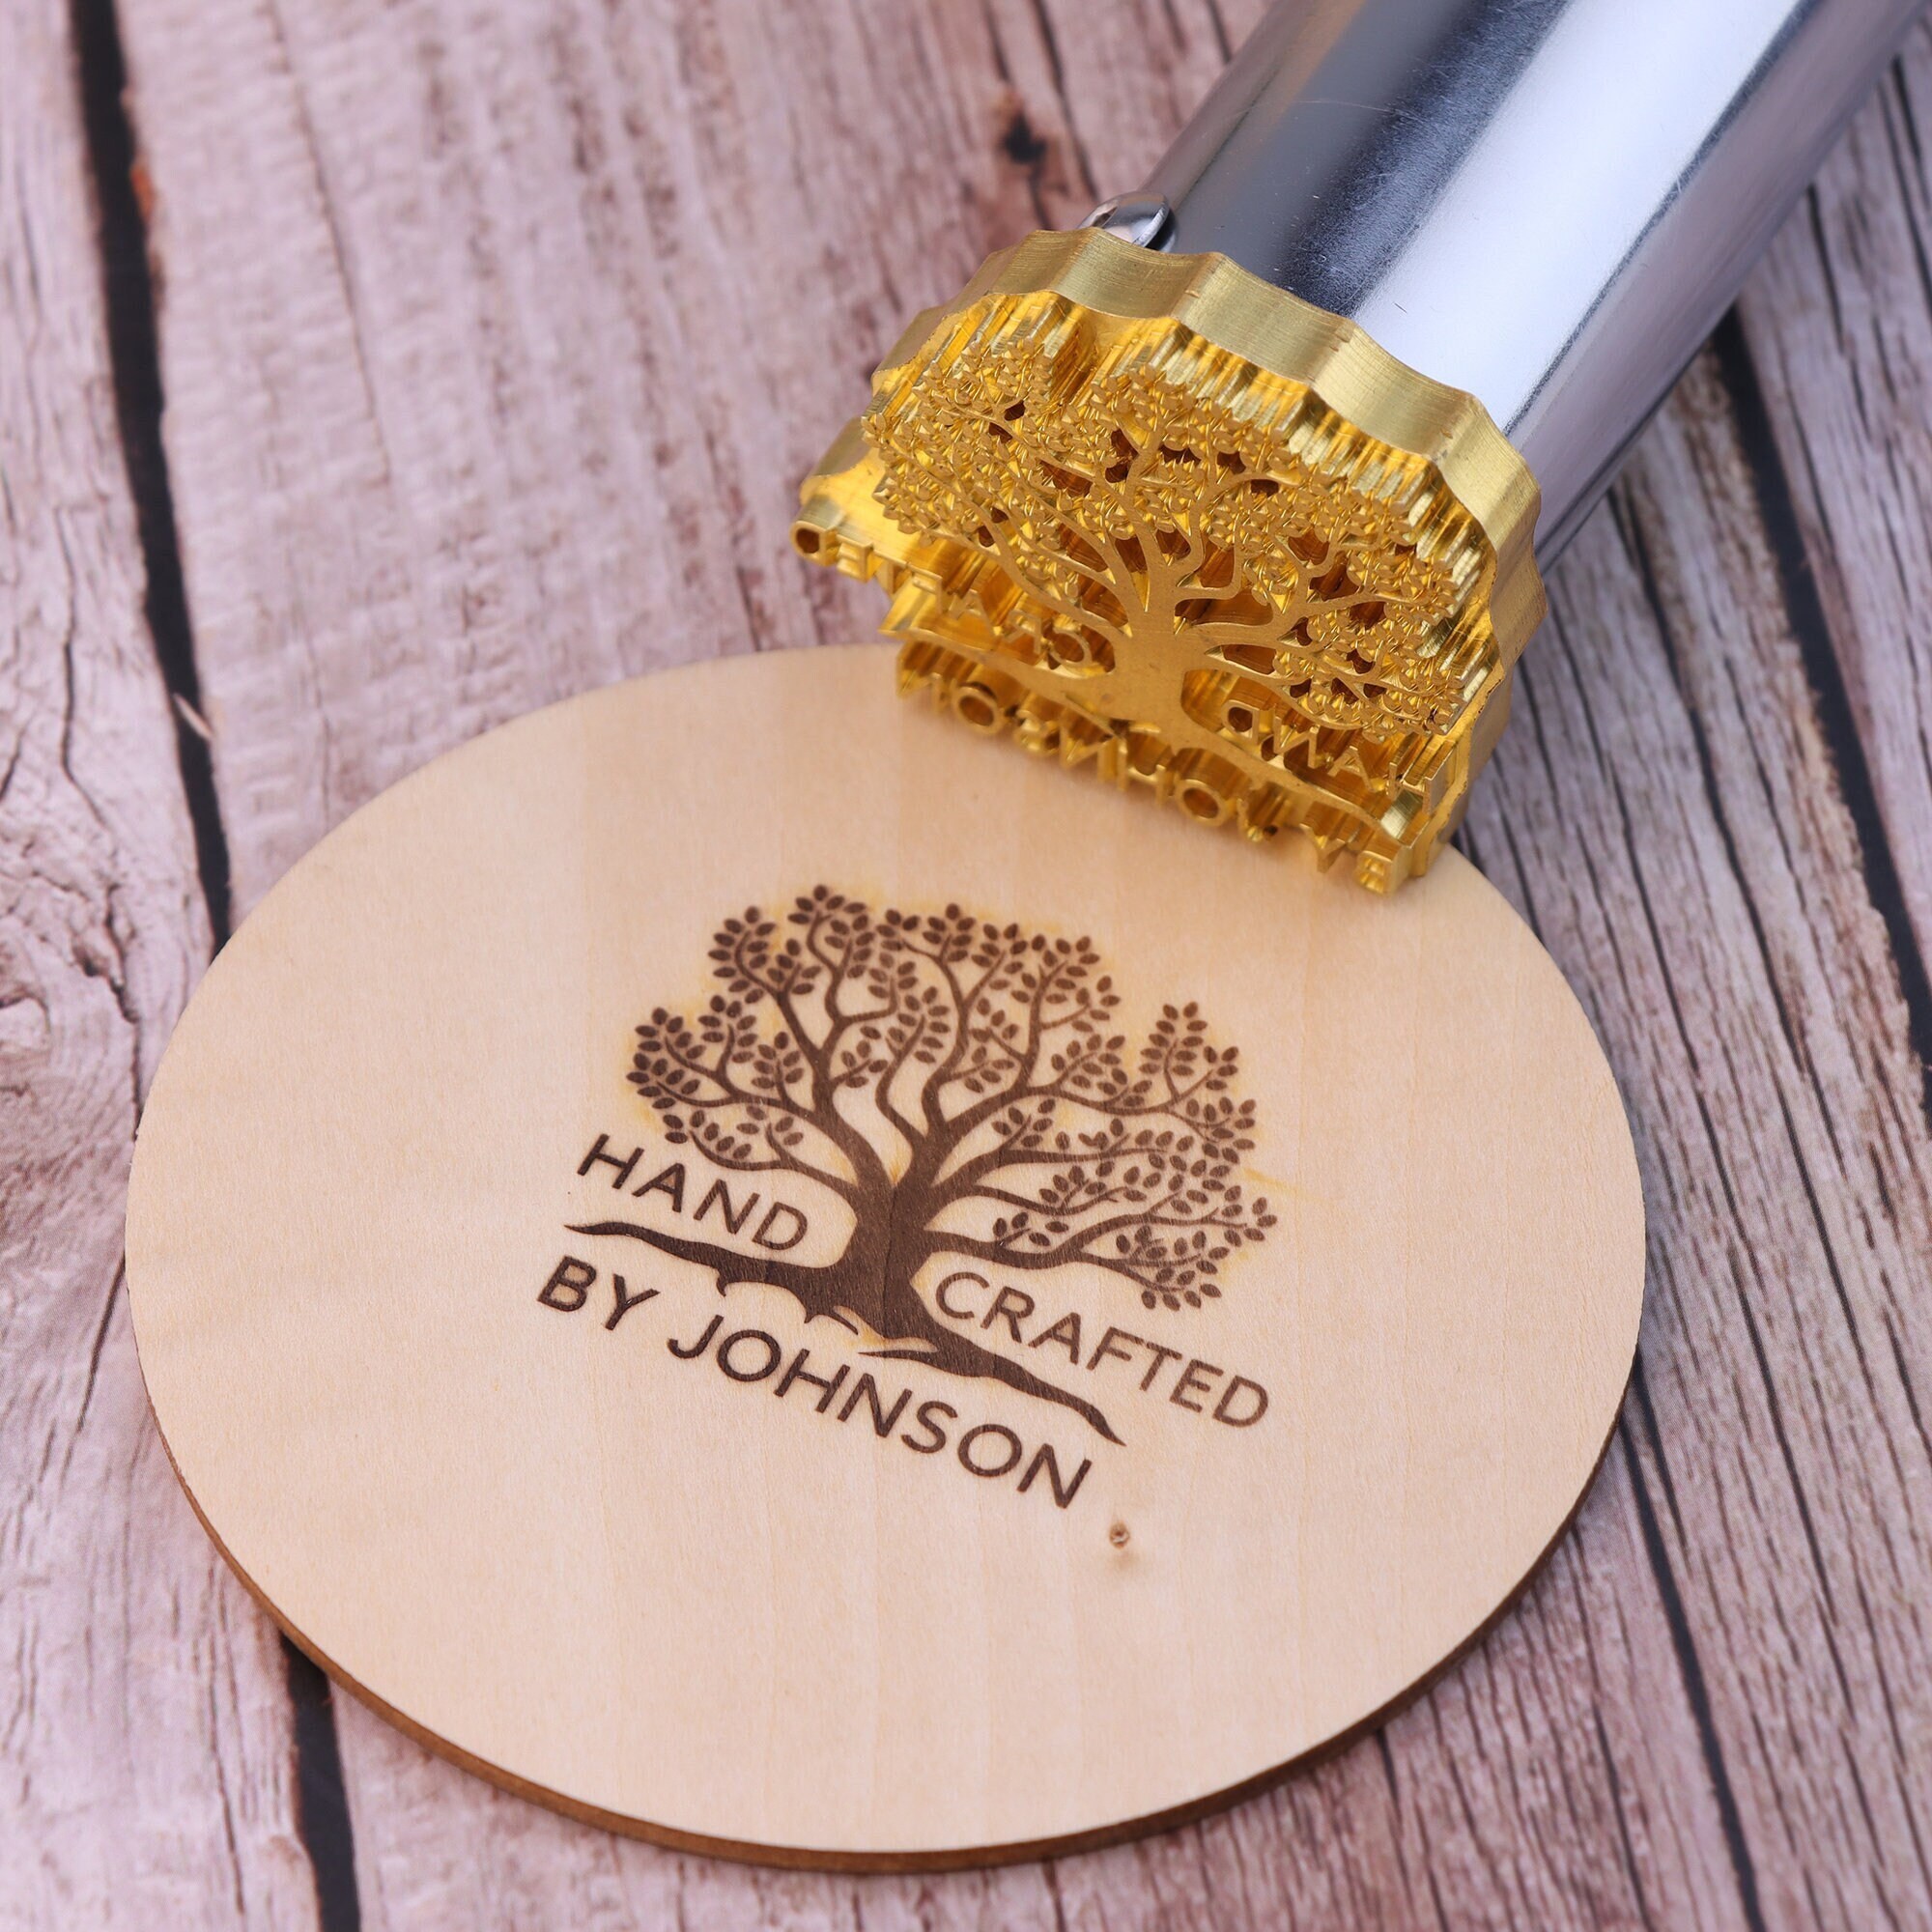 Tree branding iron